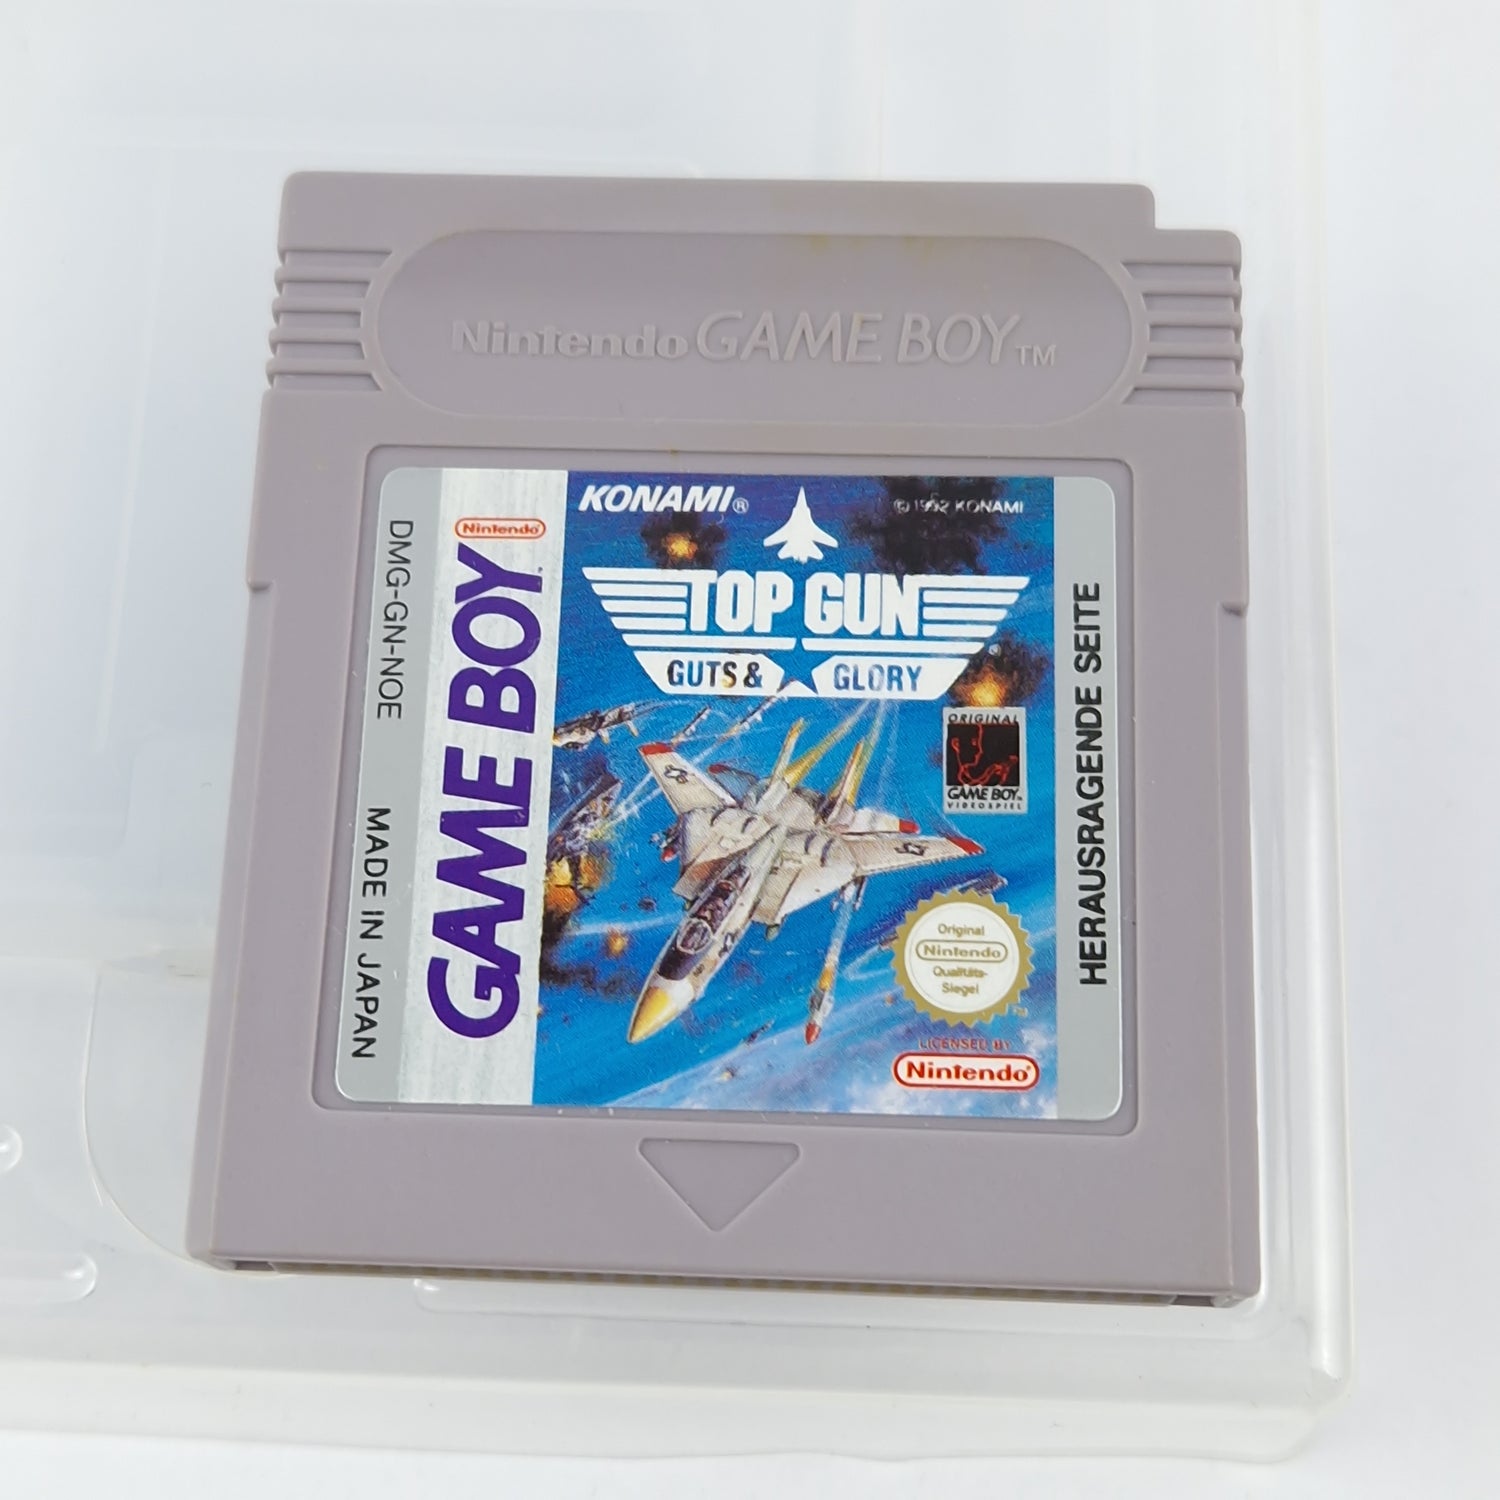 Nintendo Game Boy Game: Top Gun Guts & Glory - Module Instructions OVP cib GAMEBOY